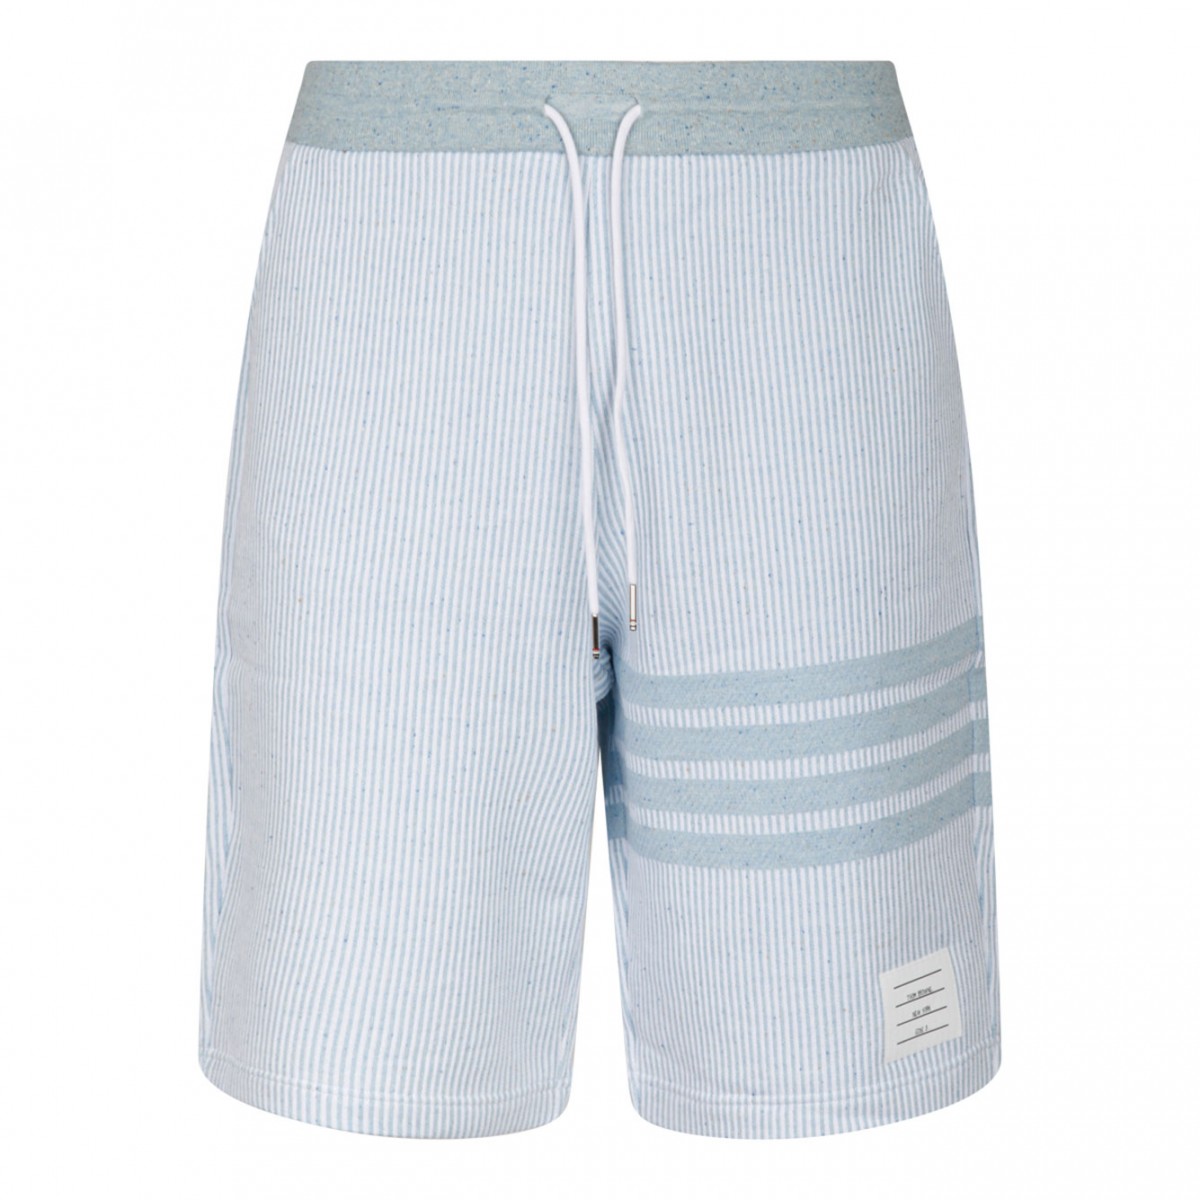 Light Blue 4-Bar Striped Shorts